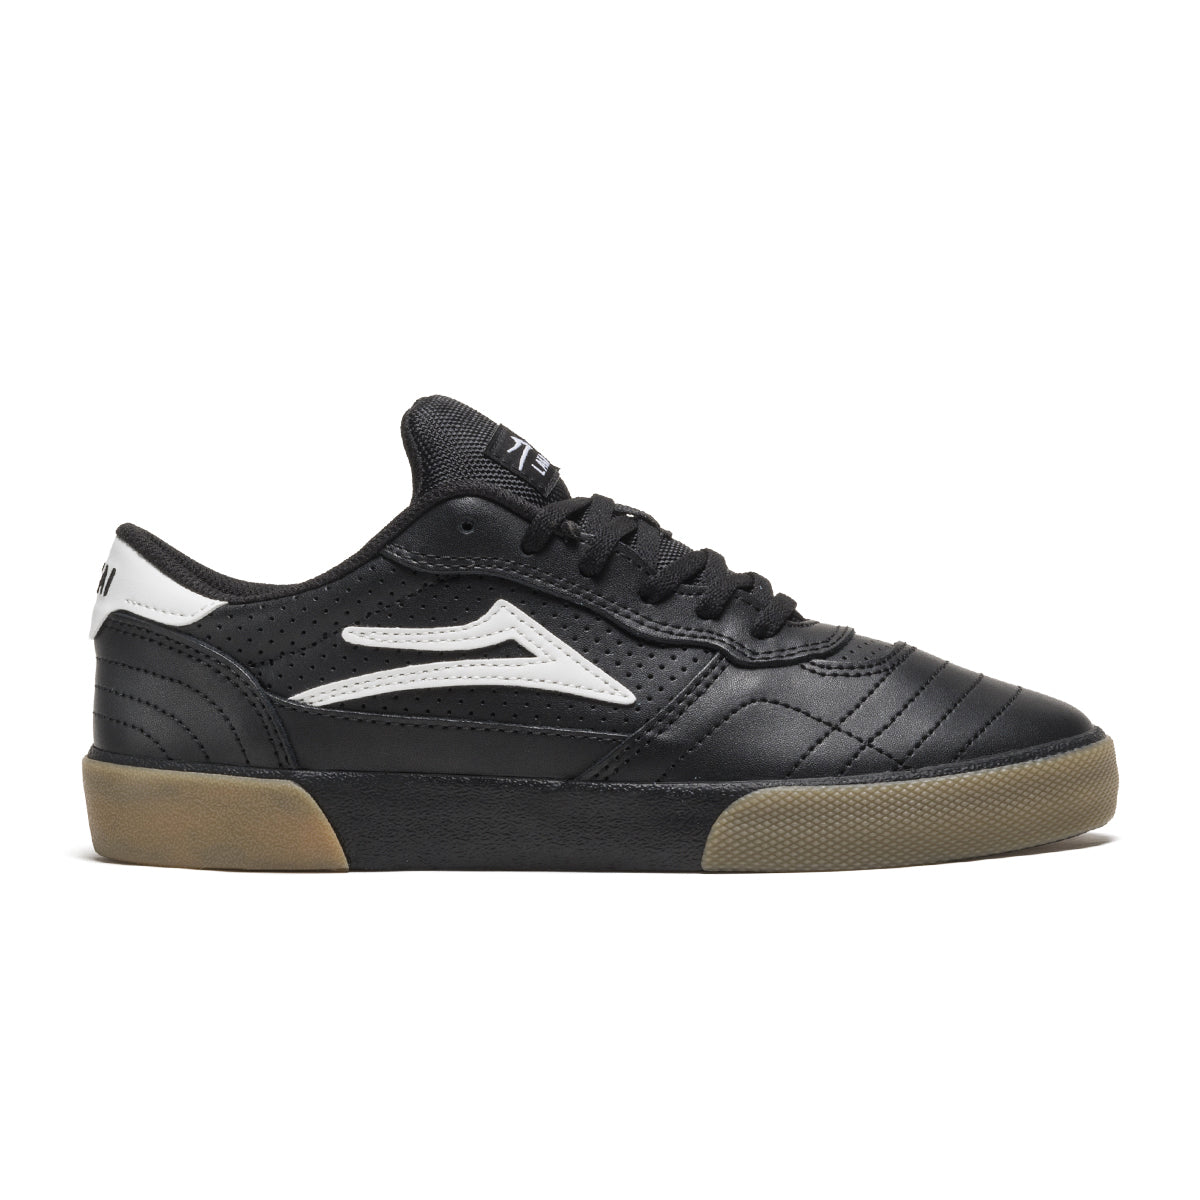 Black/Gum Leather Lakai Cambridge Skate Shoe